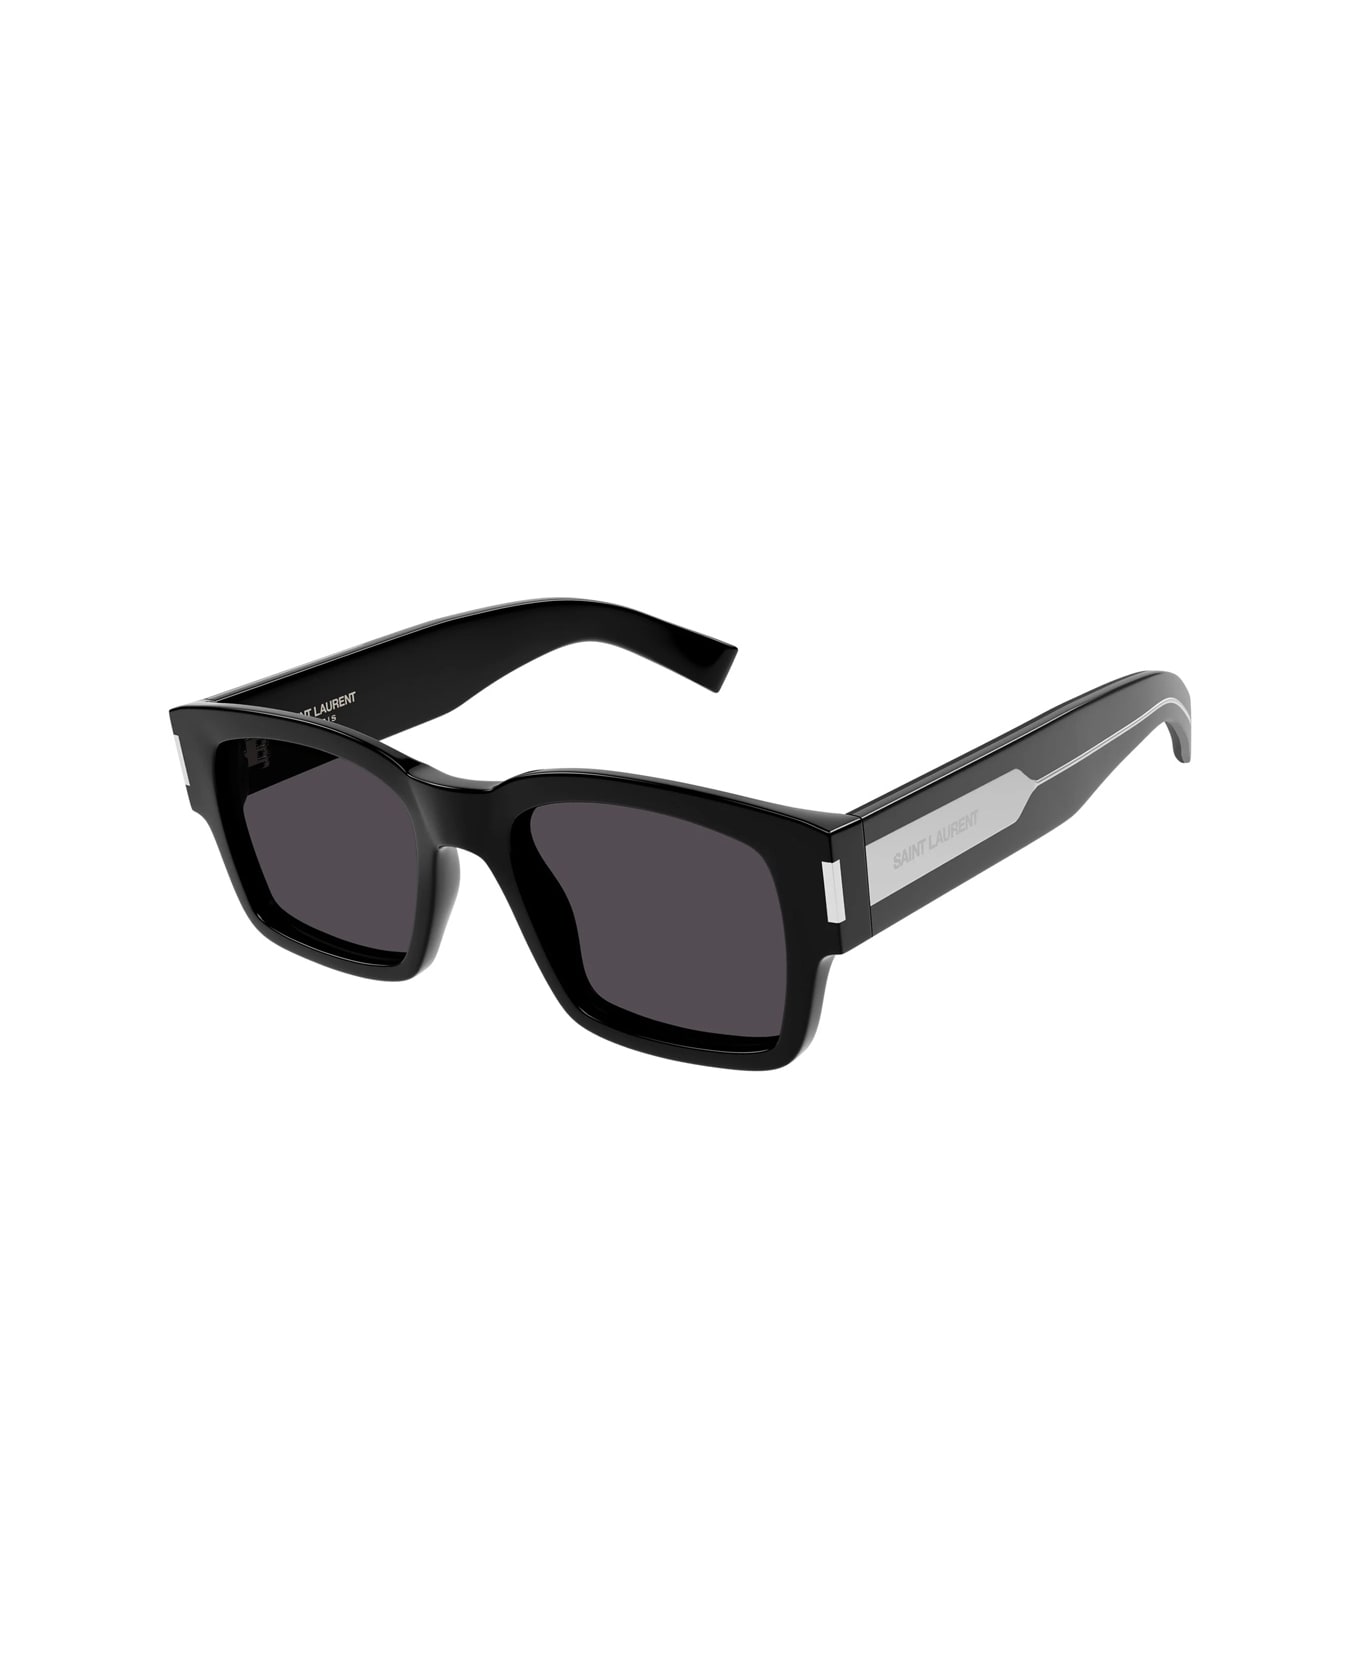 Saint Laurent Eyewear Sl 617 001 Sunglasses vlogo - Nero